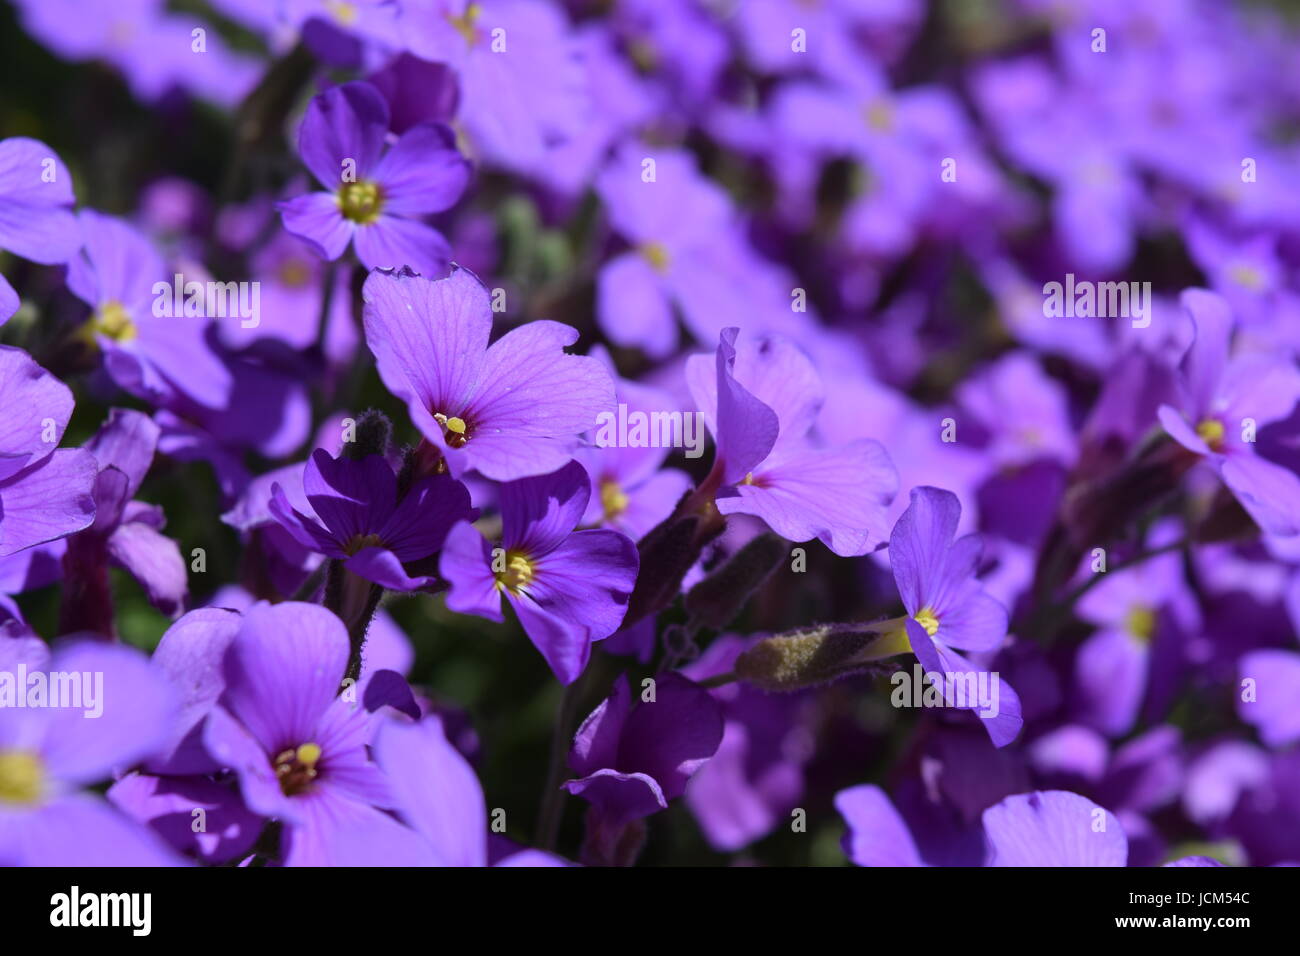 Purple aubretia flowers close-up Stock Photo